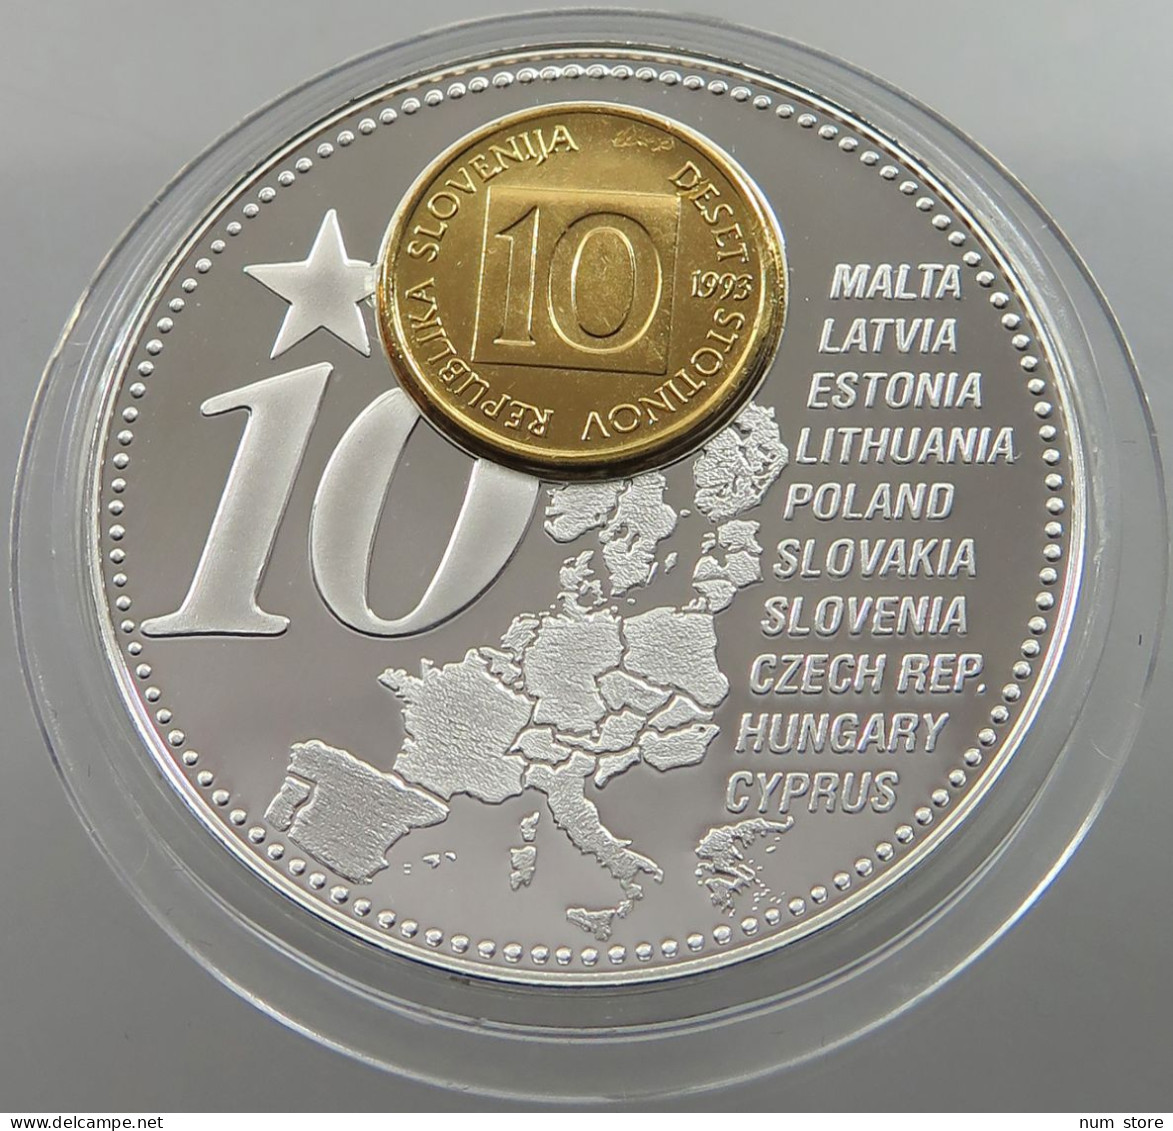 SLOVENIA MEDAL 2006 THE FORTHCOMING NEW EURO COUNTRIES #sm06 0775 - Slovenia